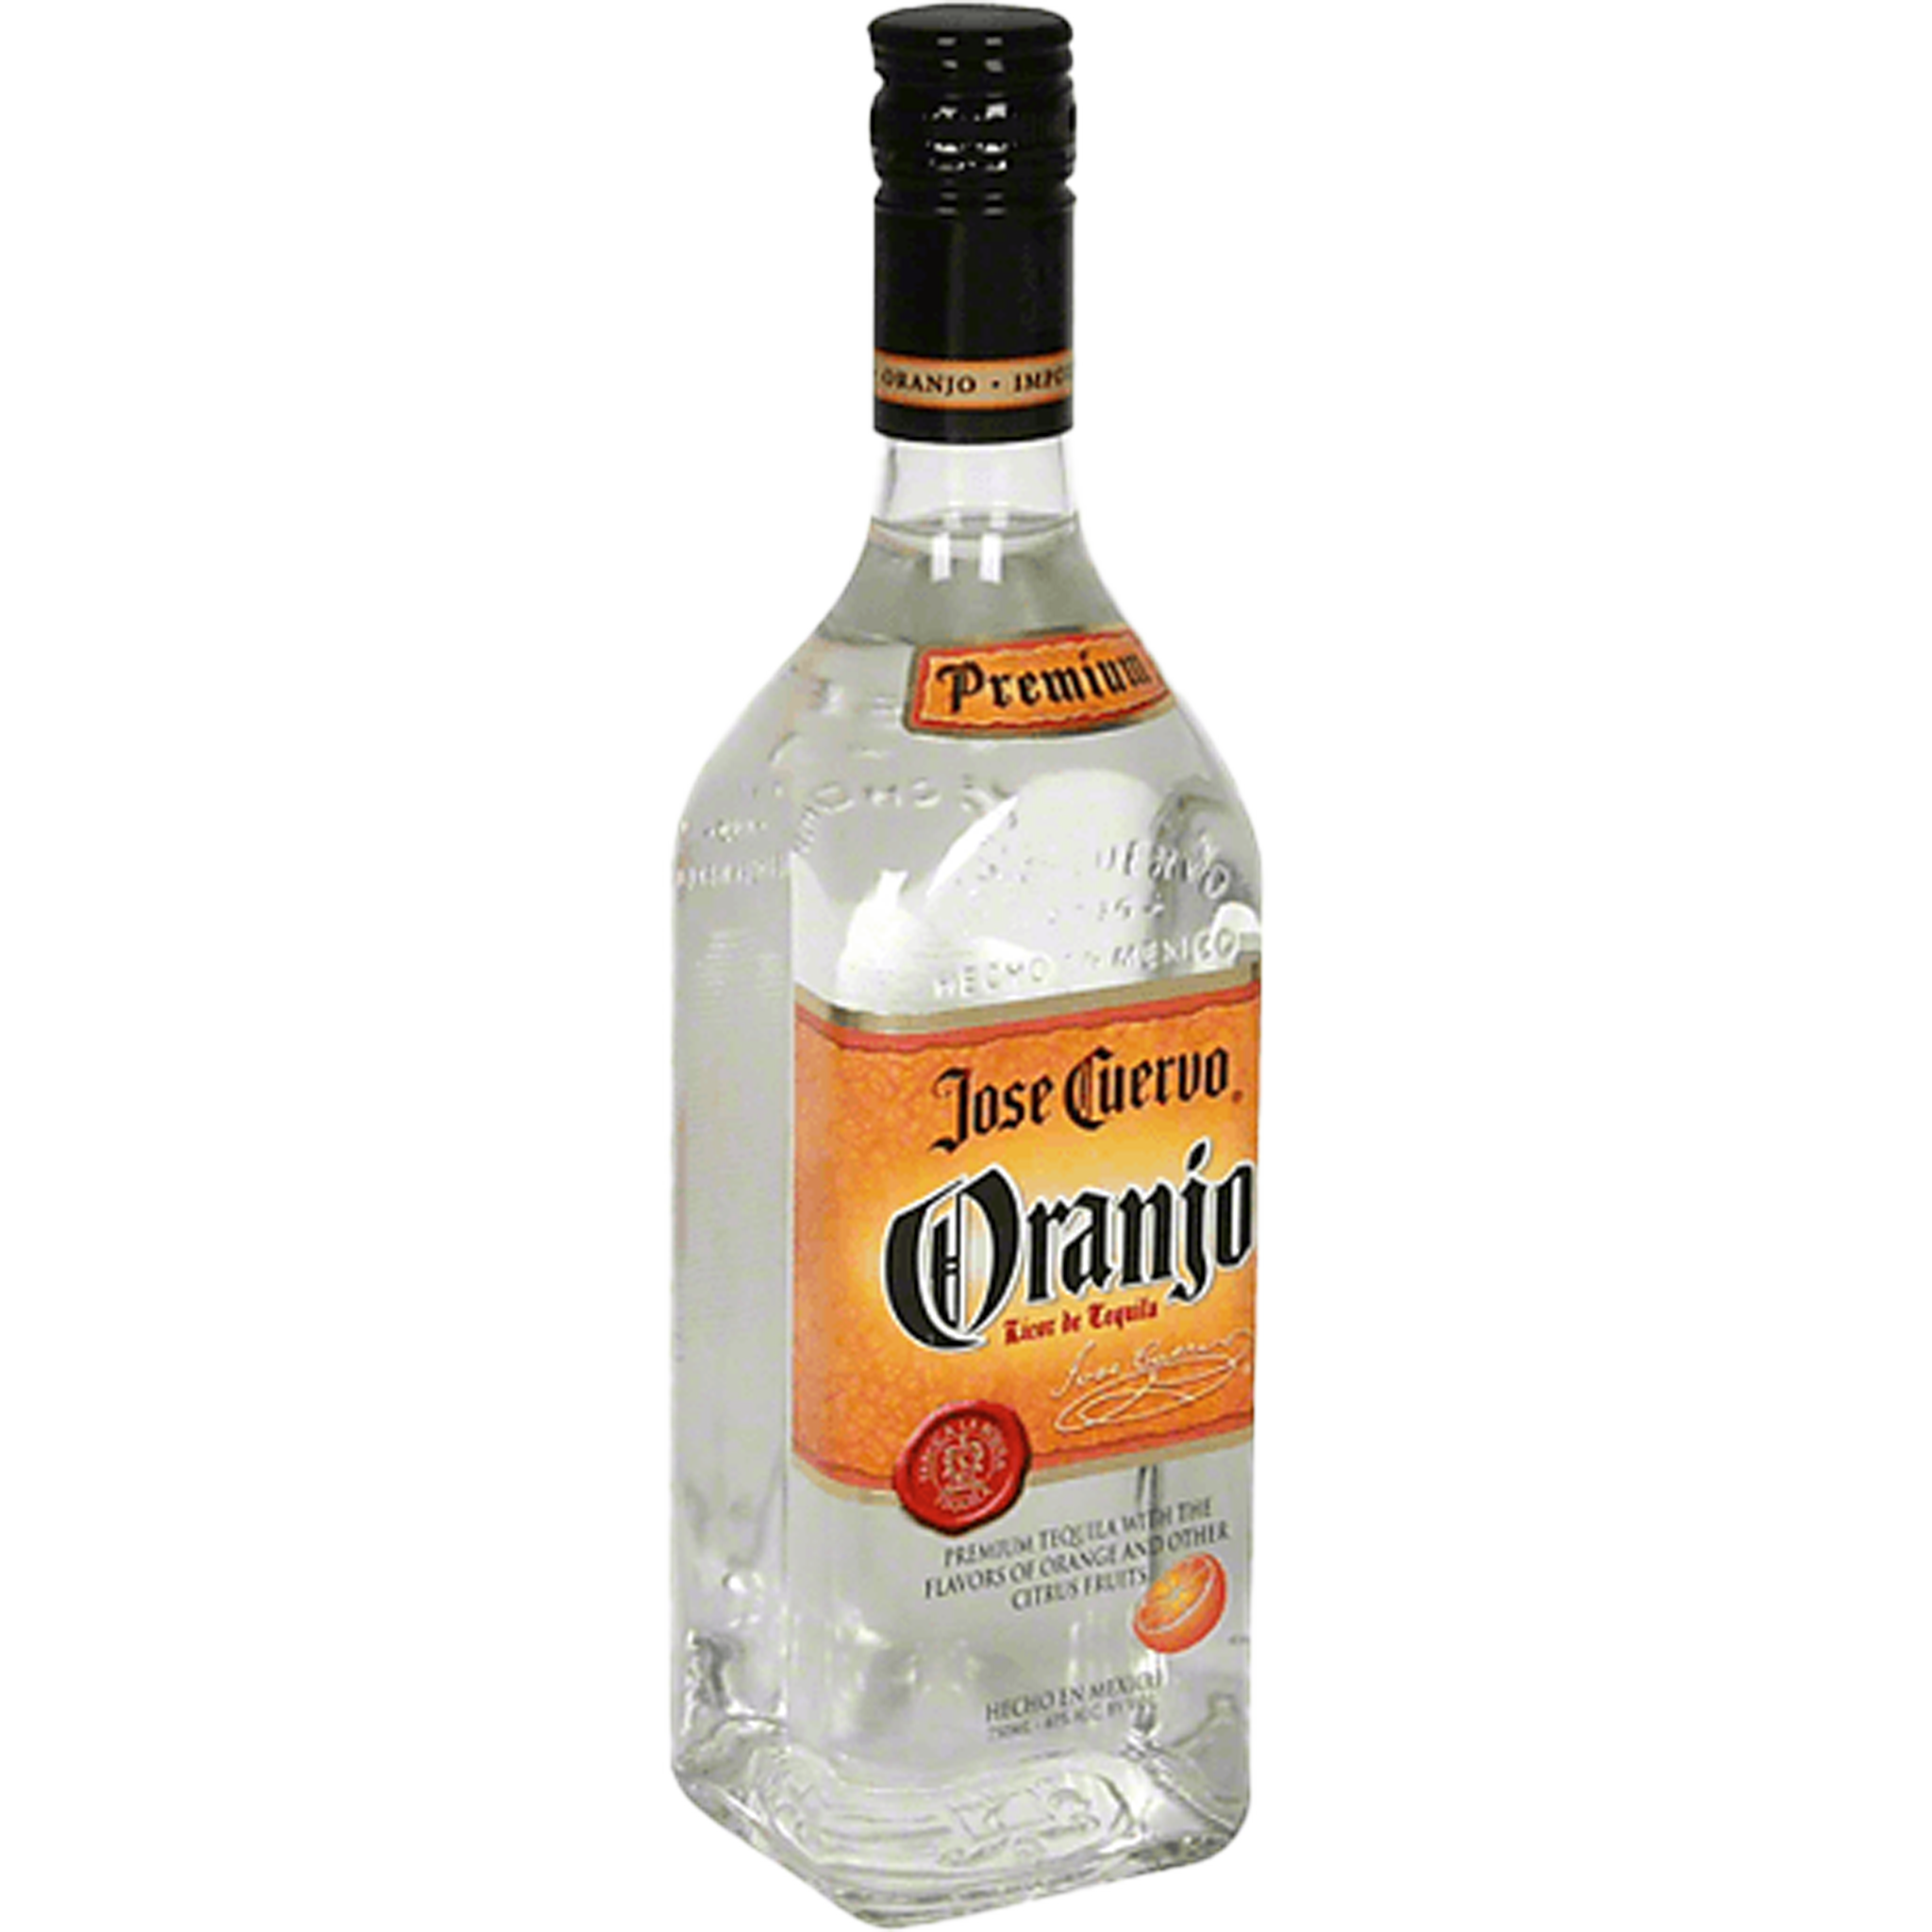 Jose Cuervo Oranjo Orange Tequila